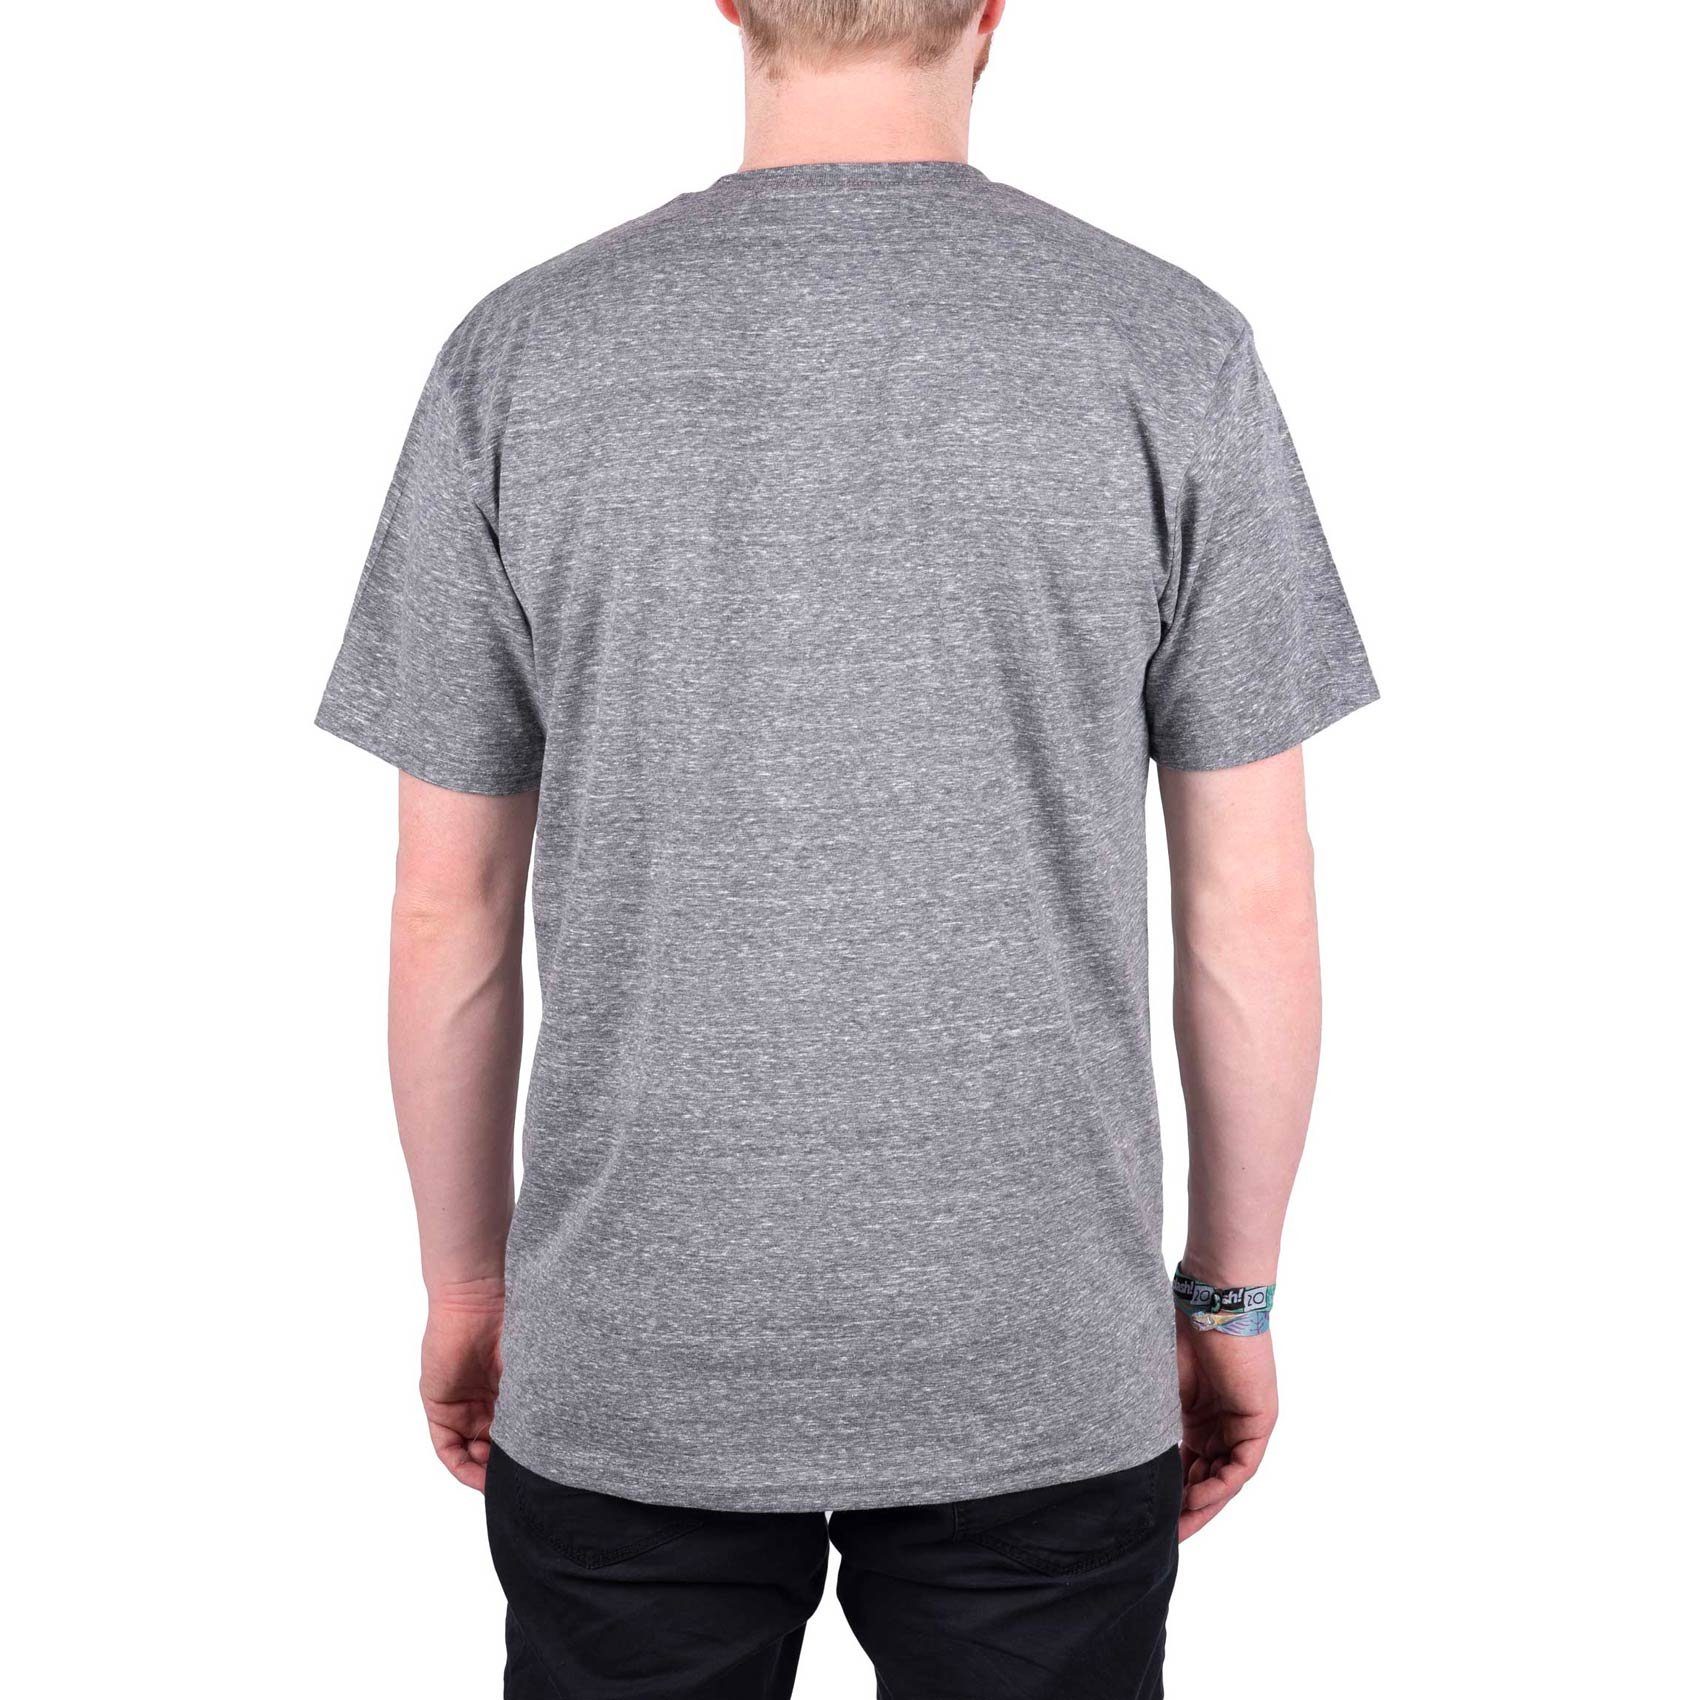 athletic - T-Shirt Pocket RIPNDIP grey Nermal Lord